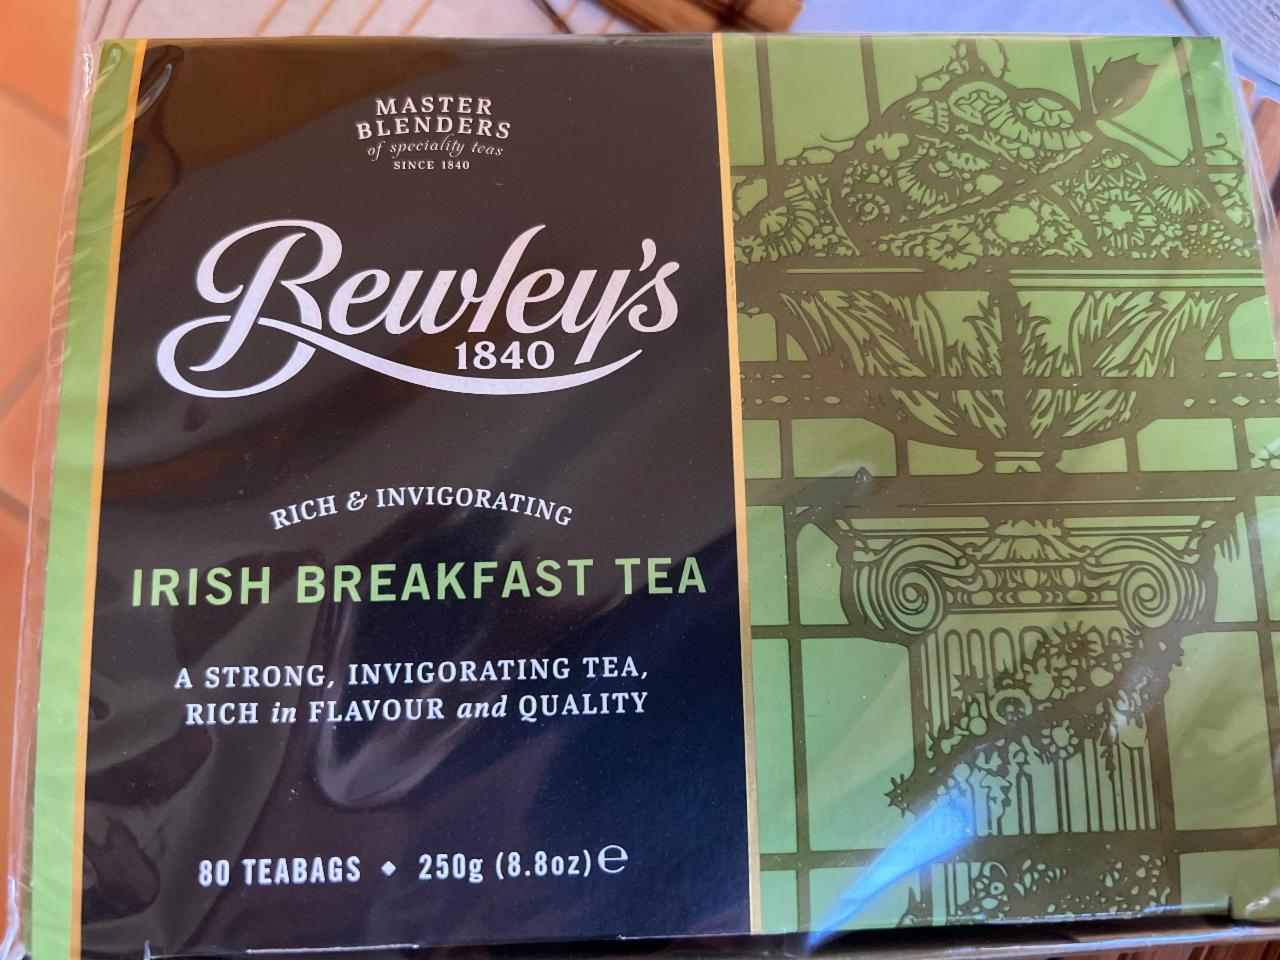 Fotografie - Irish Breakfast Tea Bewley's